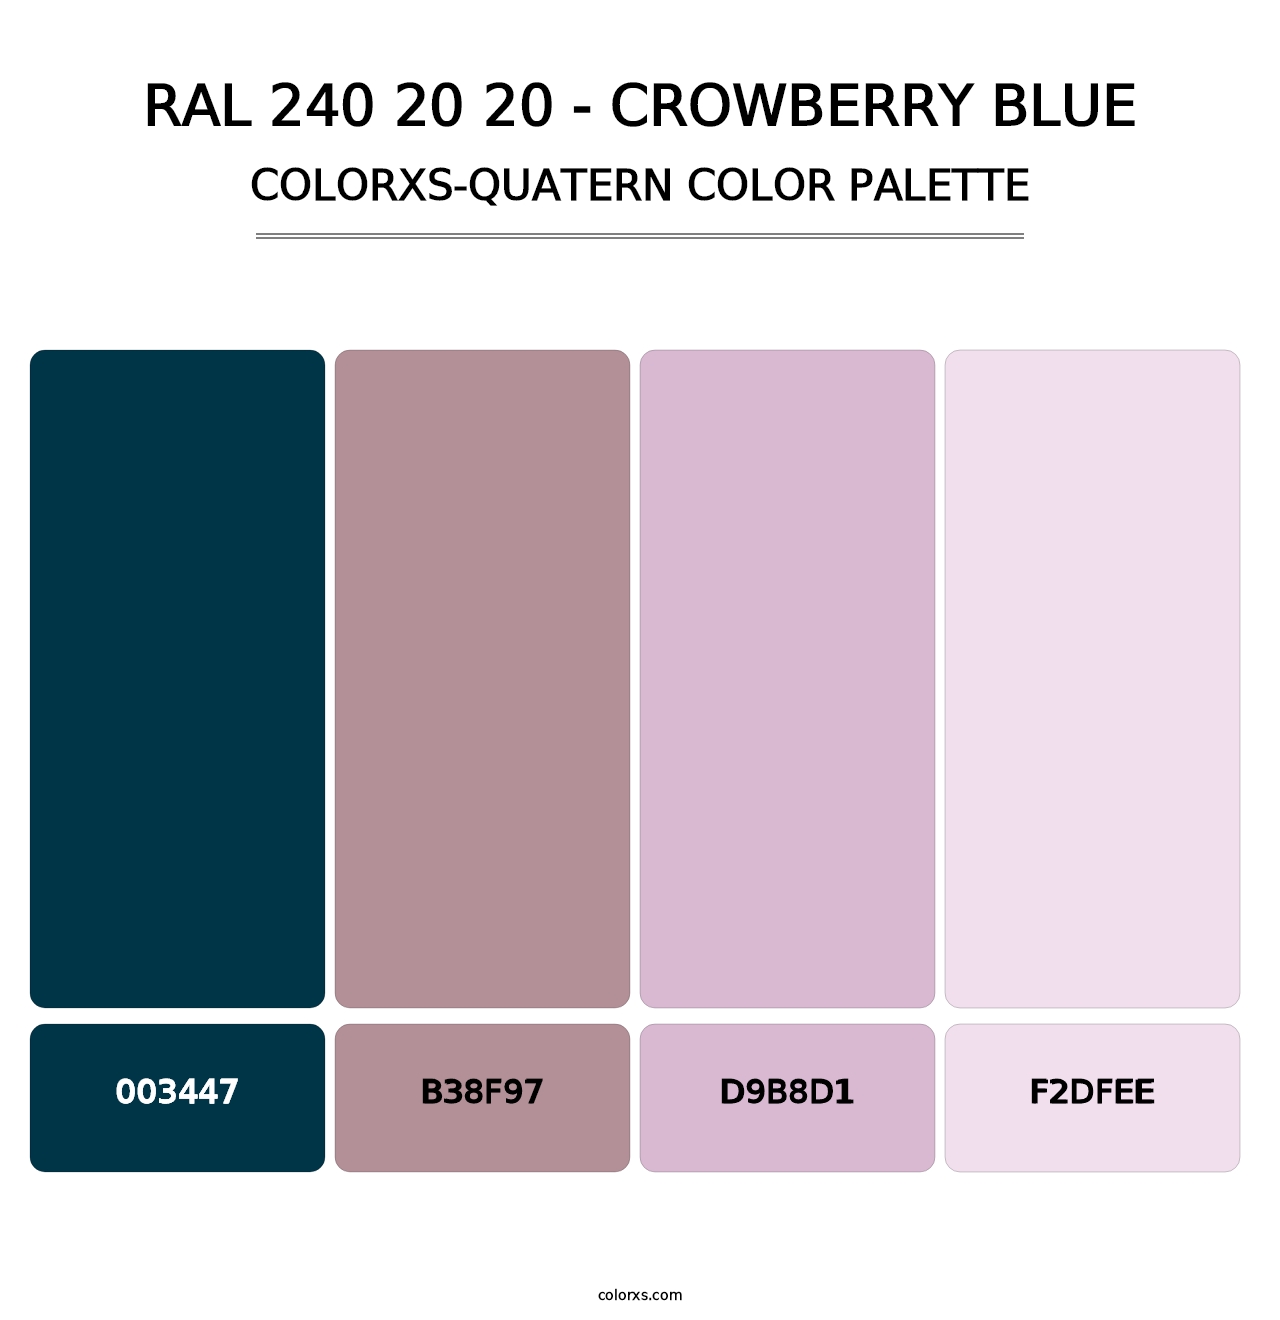 RAL 240 20 20 - Crowberry Blue - Colorxs Quatern Palette